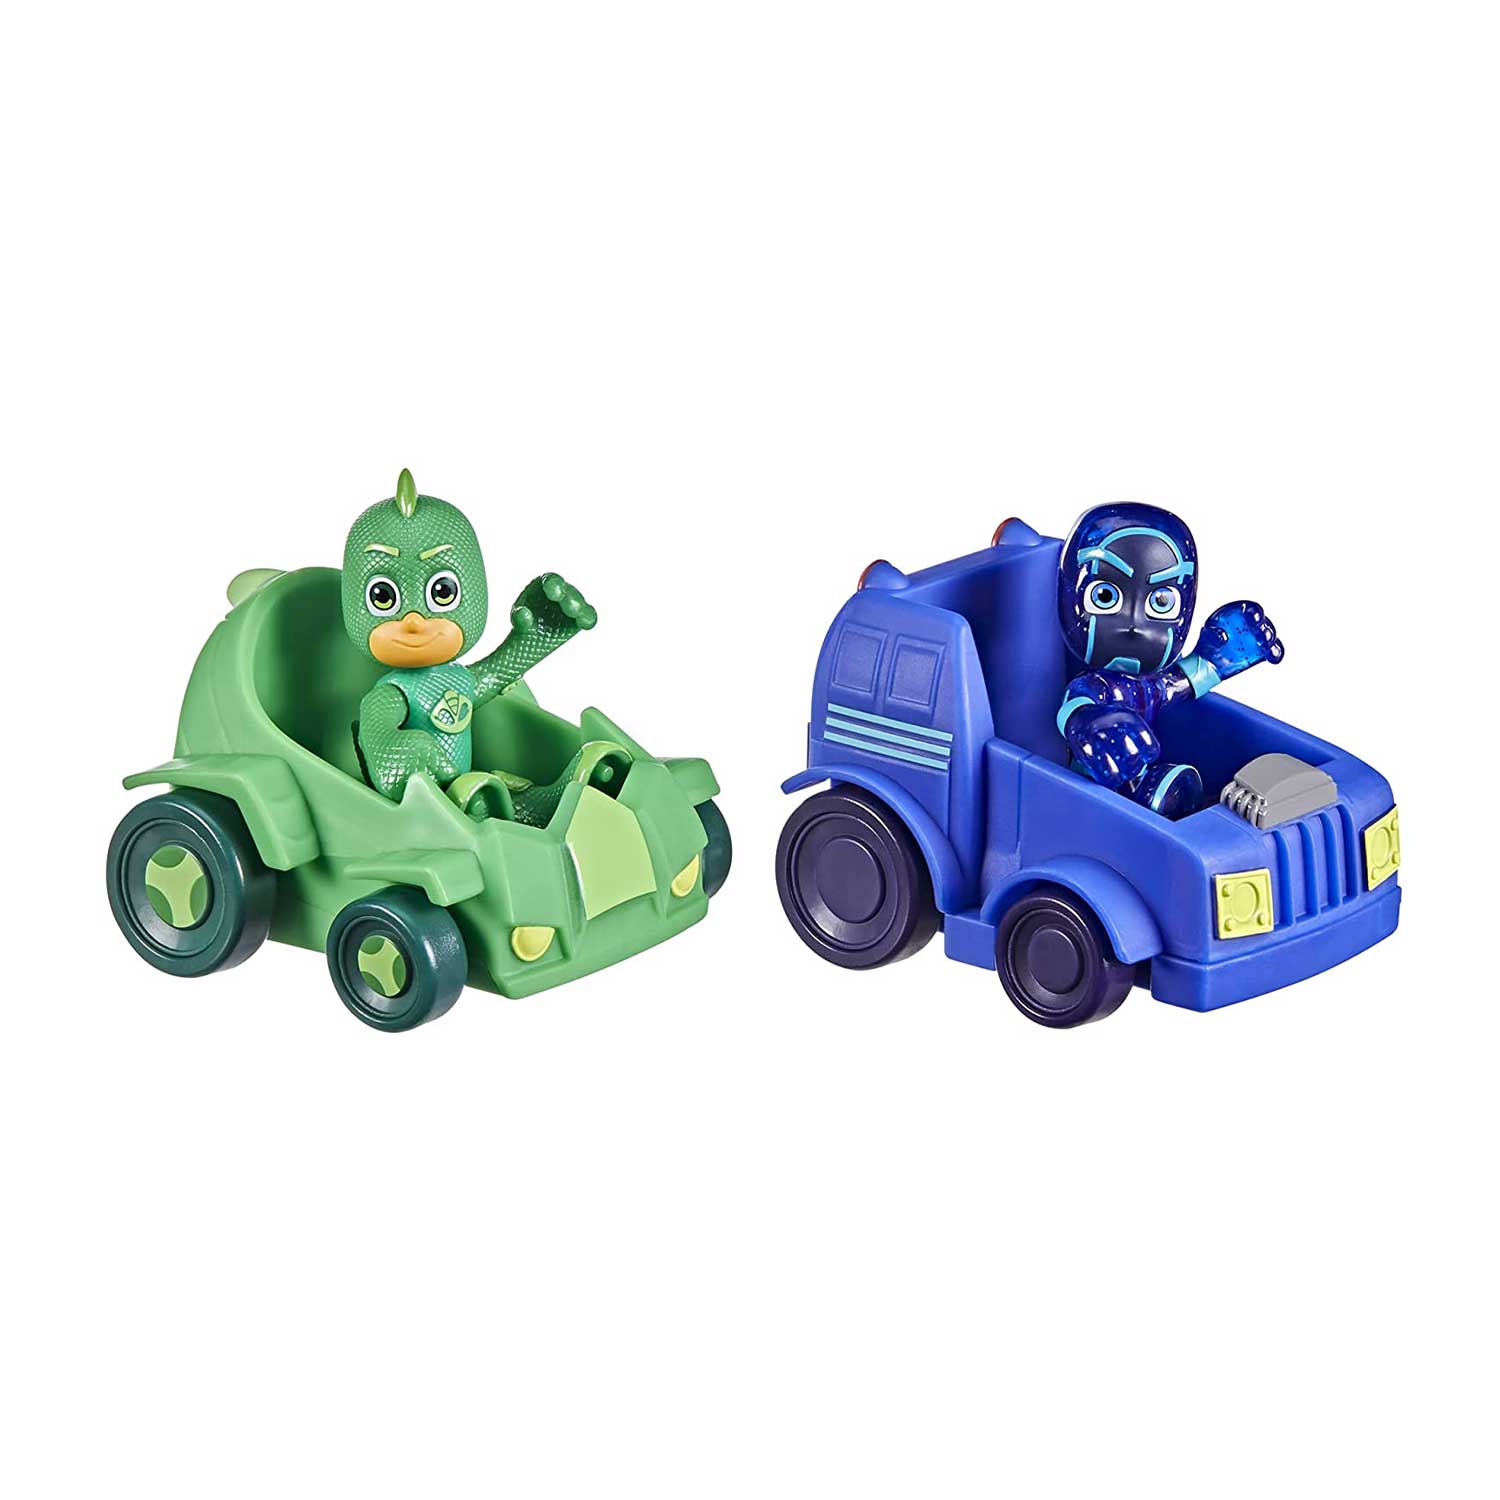 PJ Masks Gekko vs Night Ninja Battle Racers Preschool Toy, Vehicle and Action Figure Set for Kids Ages 3 and Up - Mod: HSBF28415L0